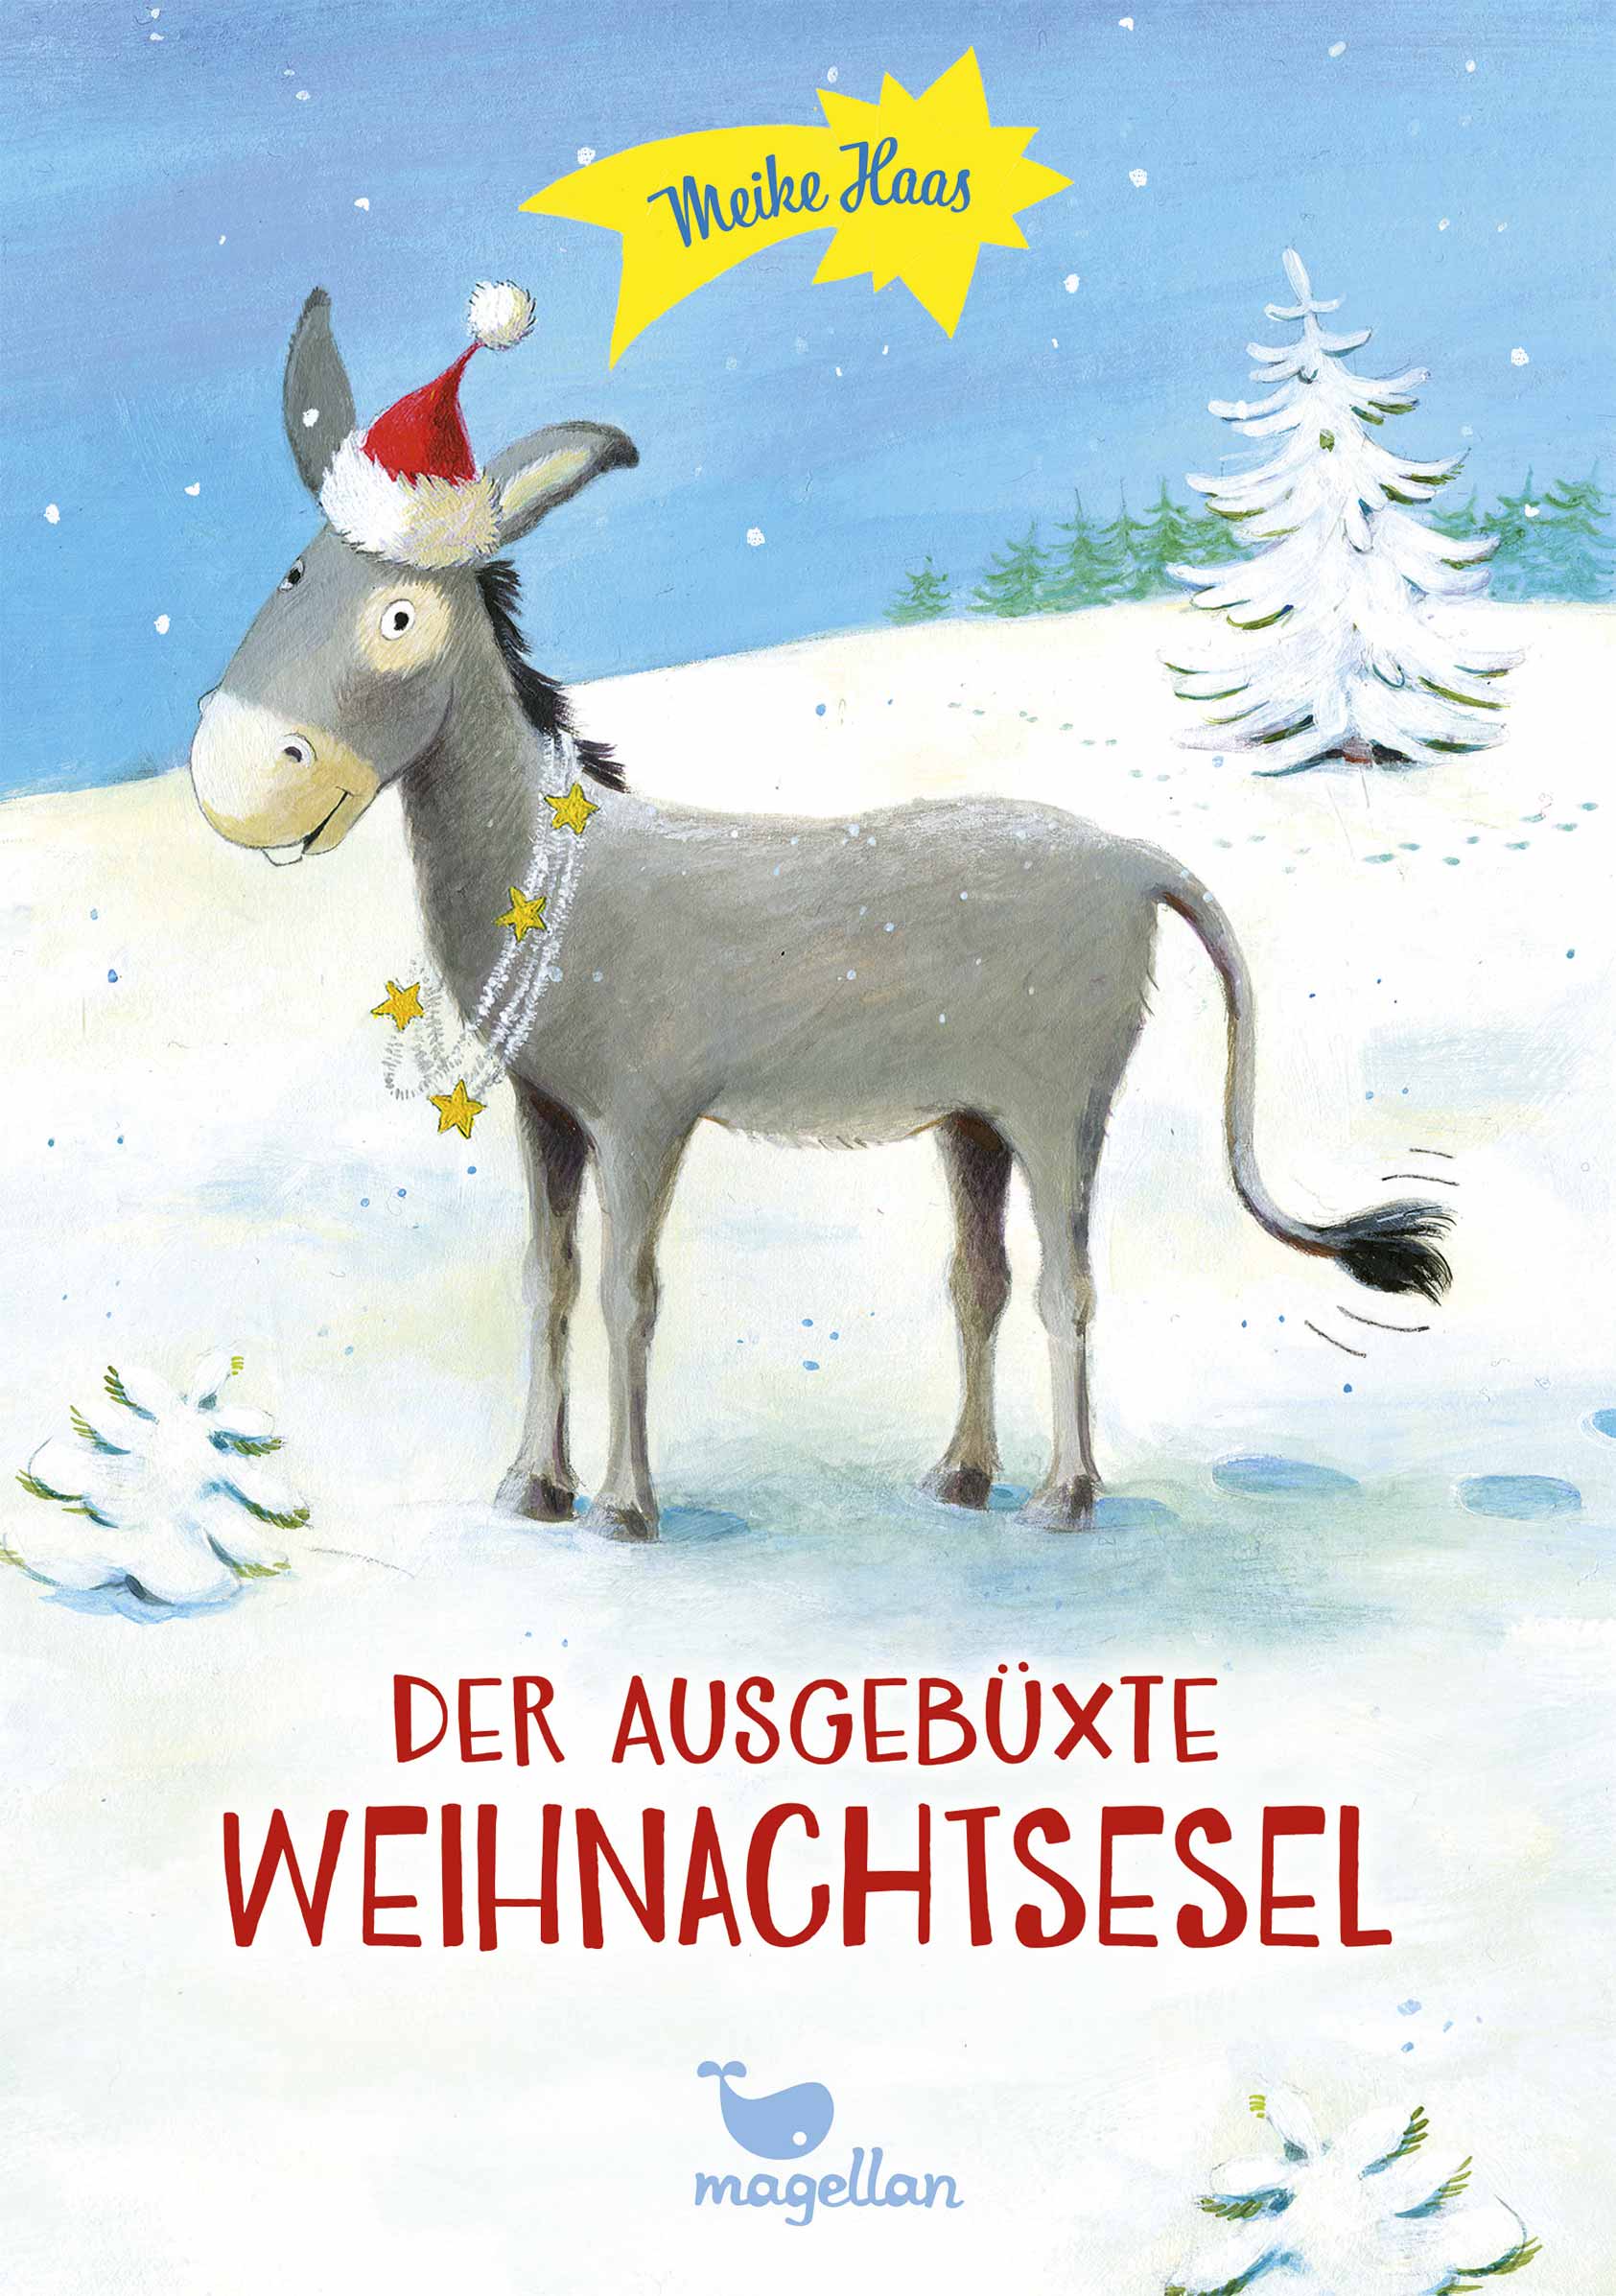 Happy Nikolaustag!